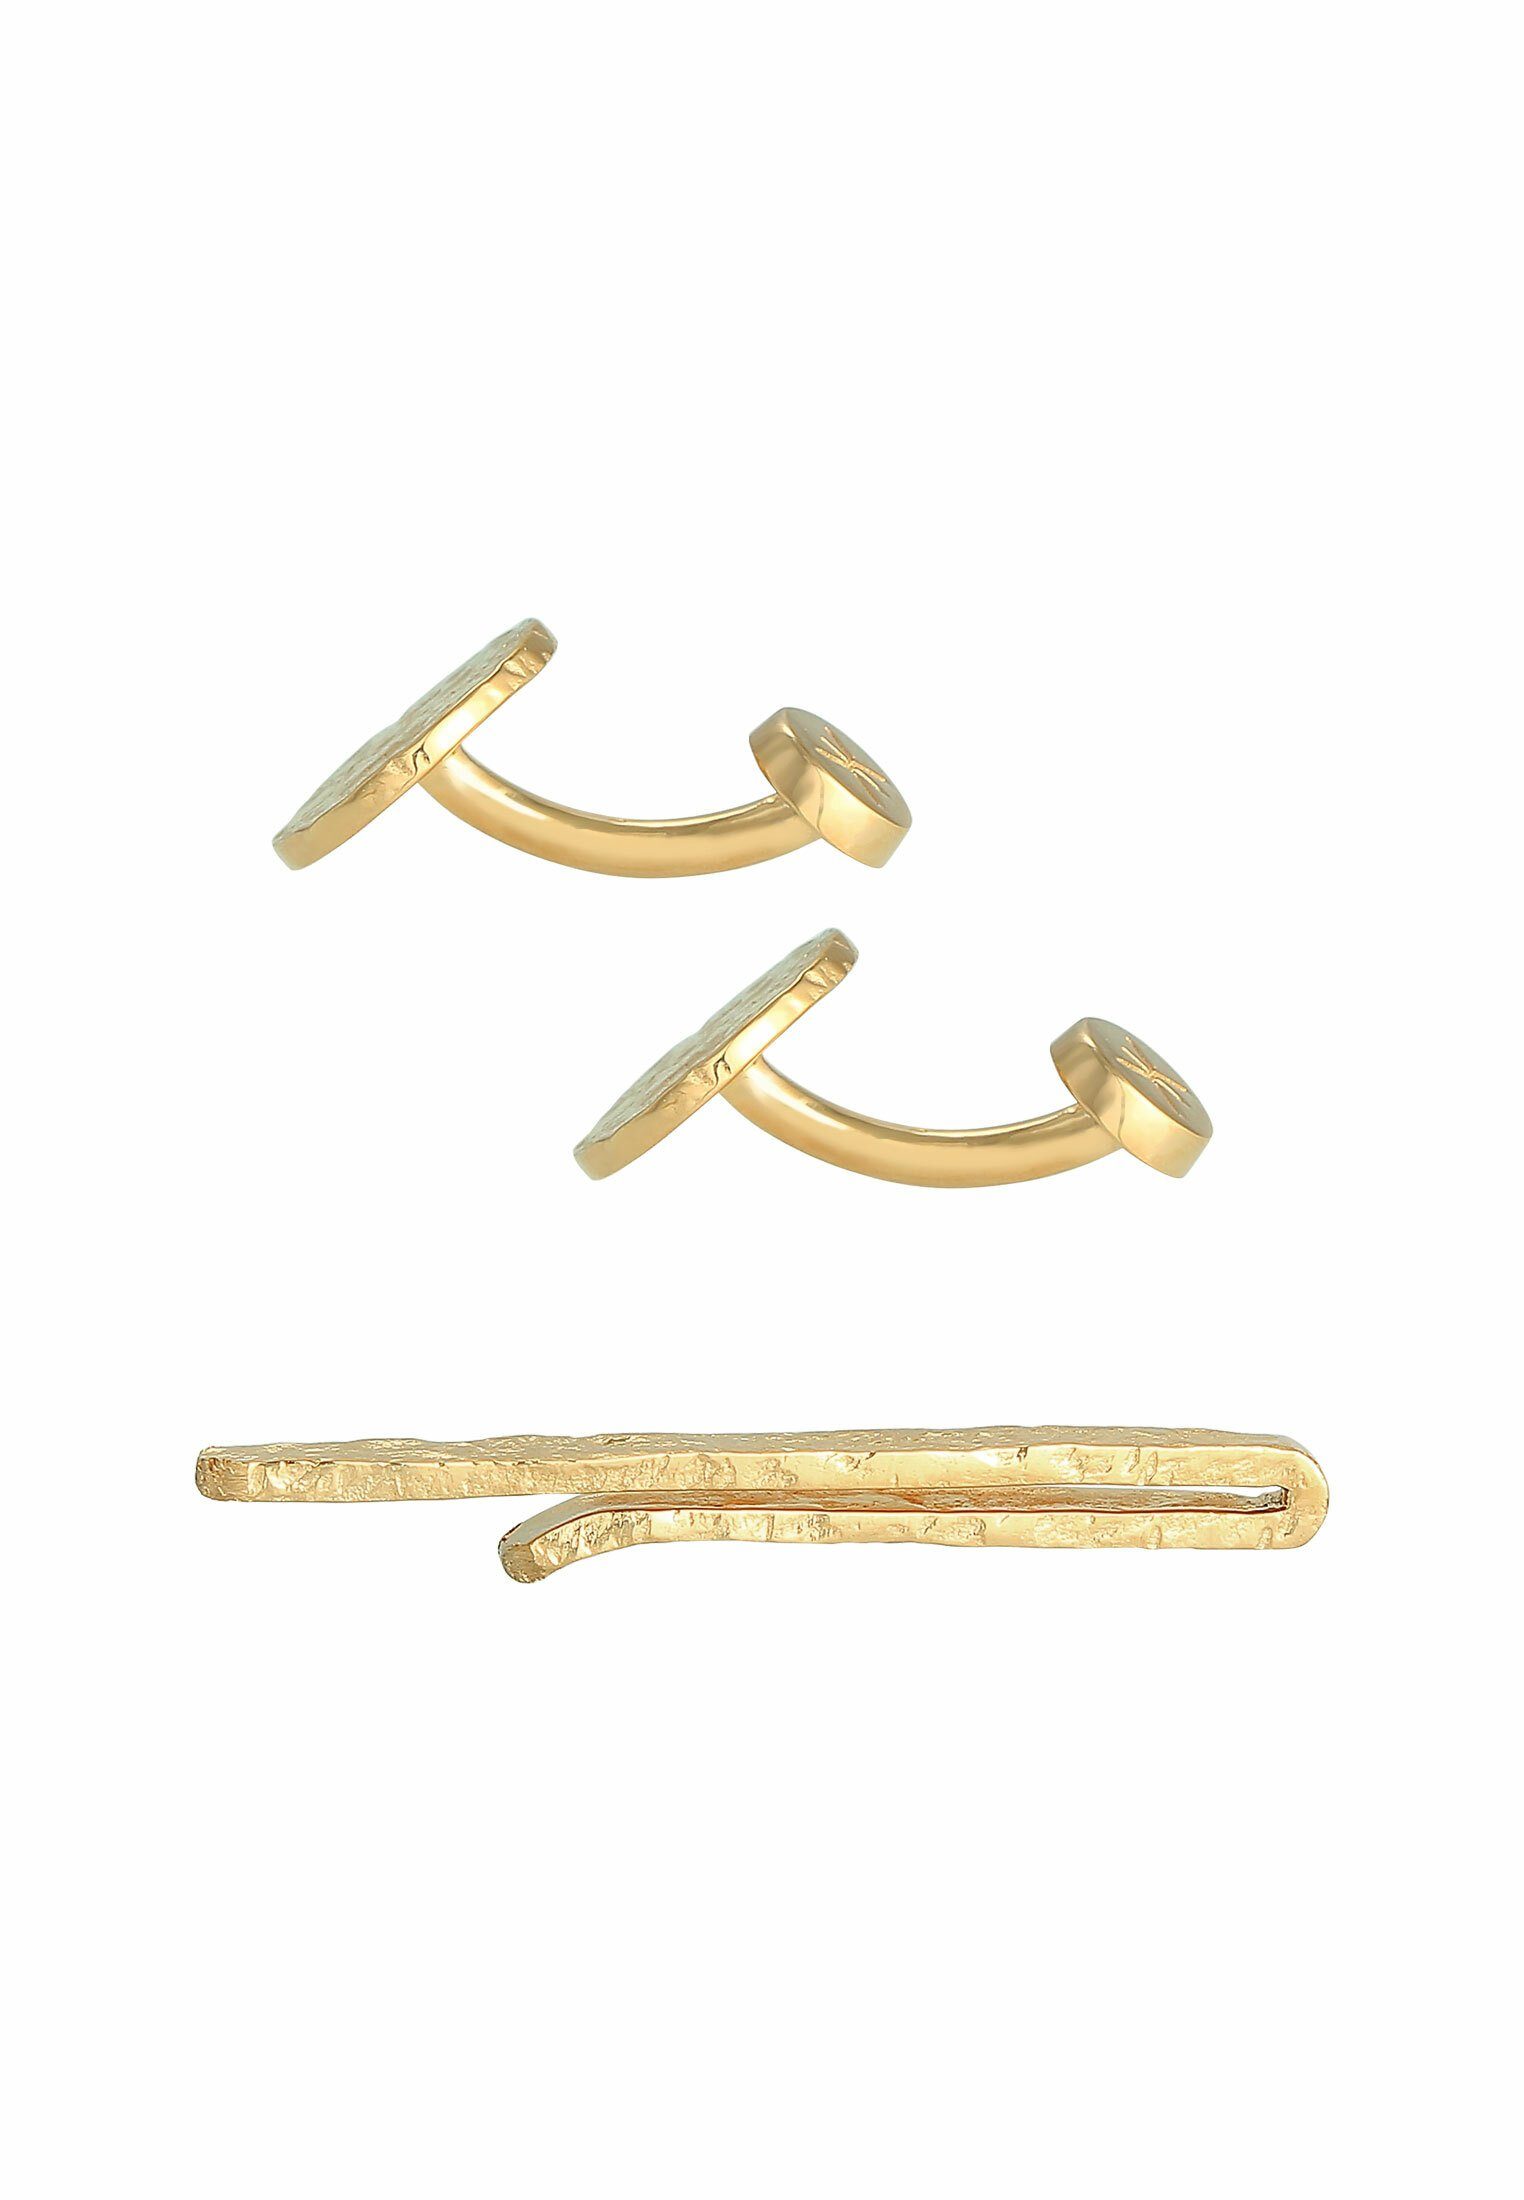 Kuzzoi Krawattennadel Krawattennadel Set Manschettenknöpfe Struktur Gold Silber